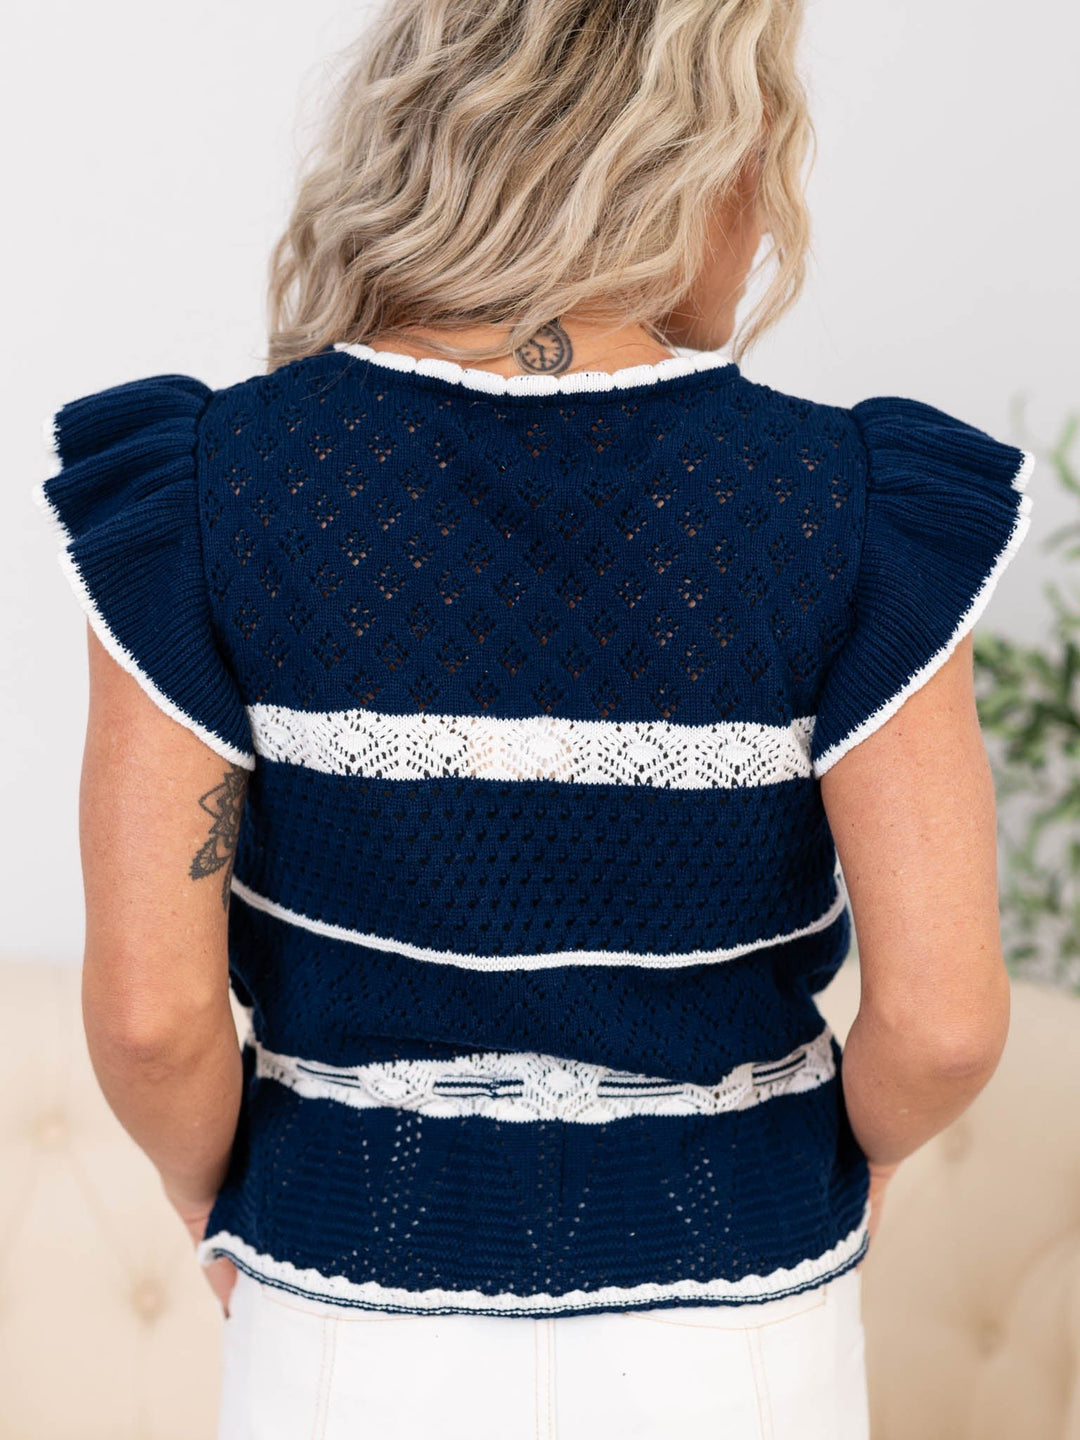 Crochet Tie Front Ruffle Sleeve TopKnit tops